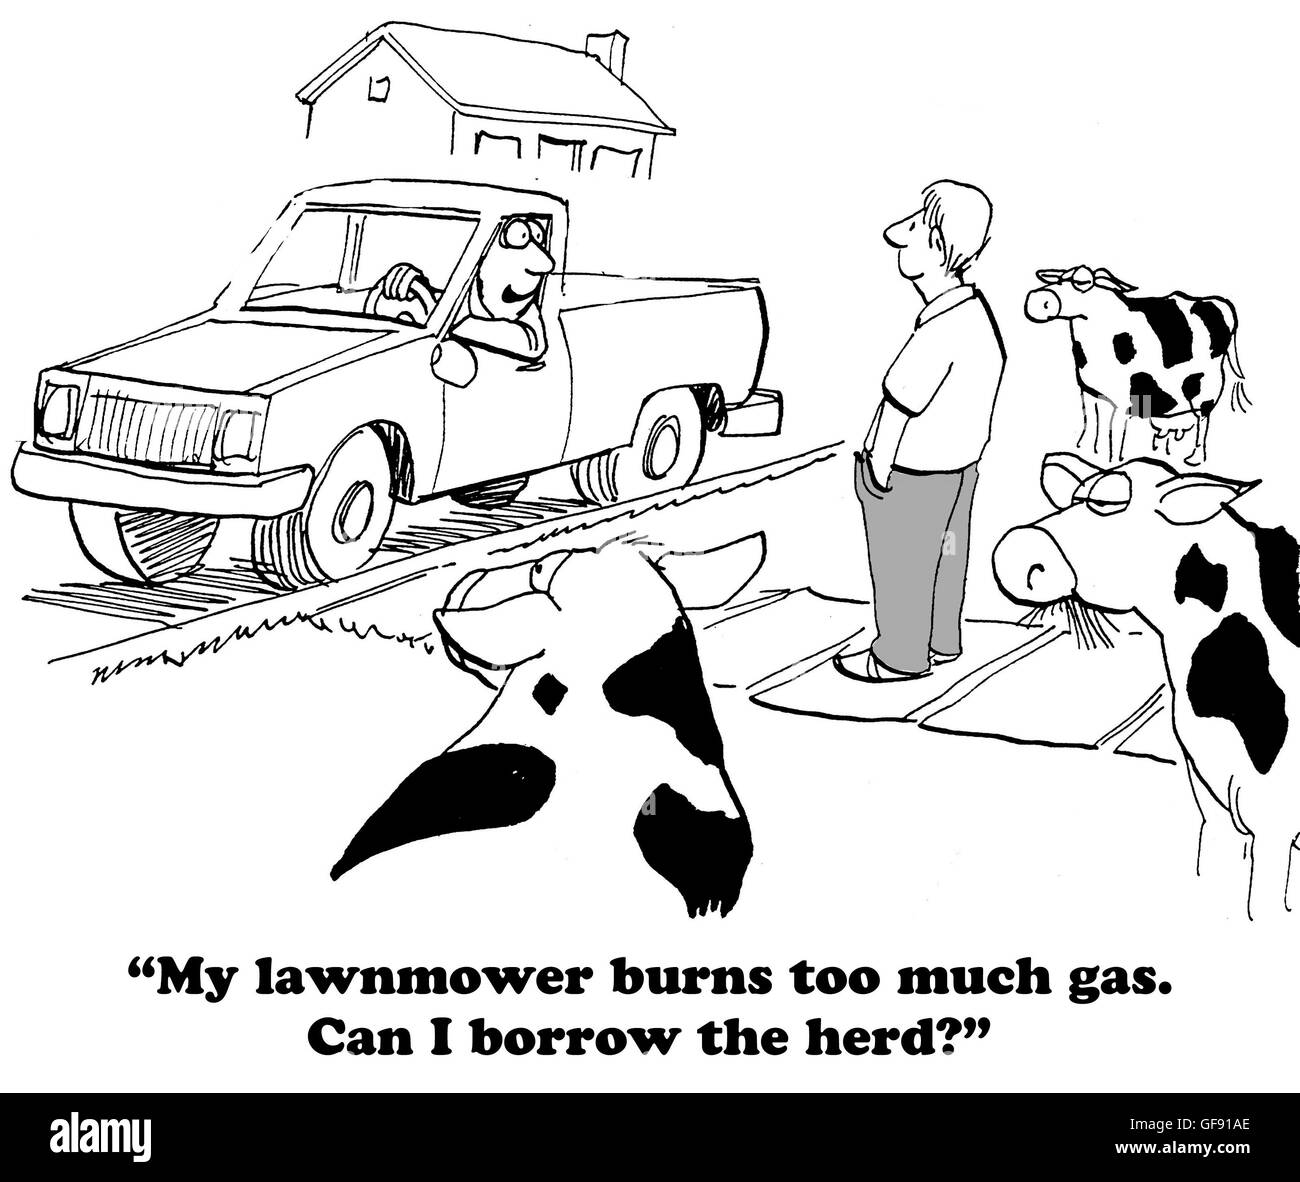 Cartoon about yard work. Stock Photo